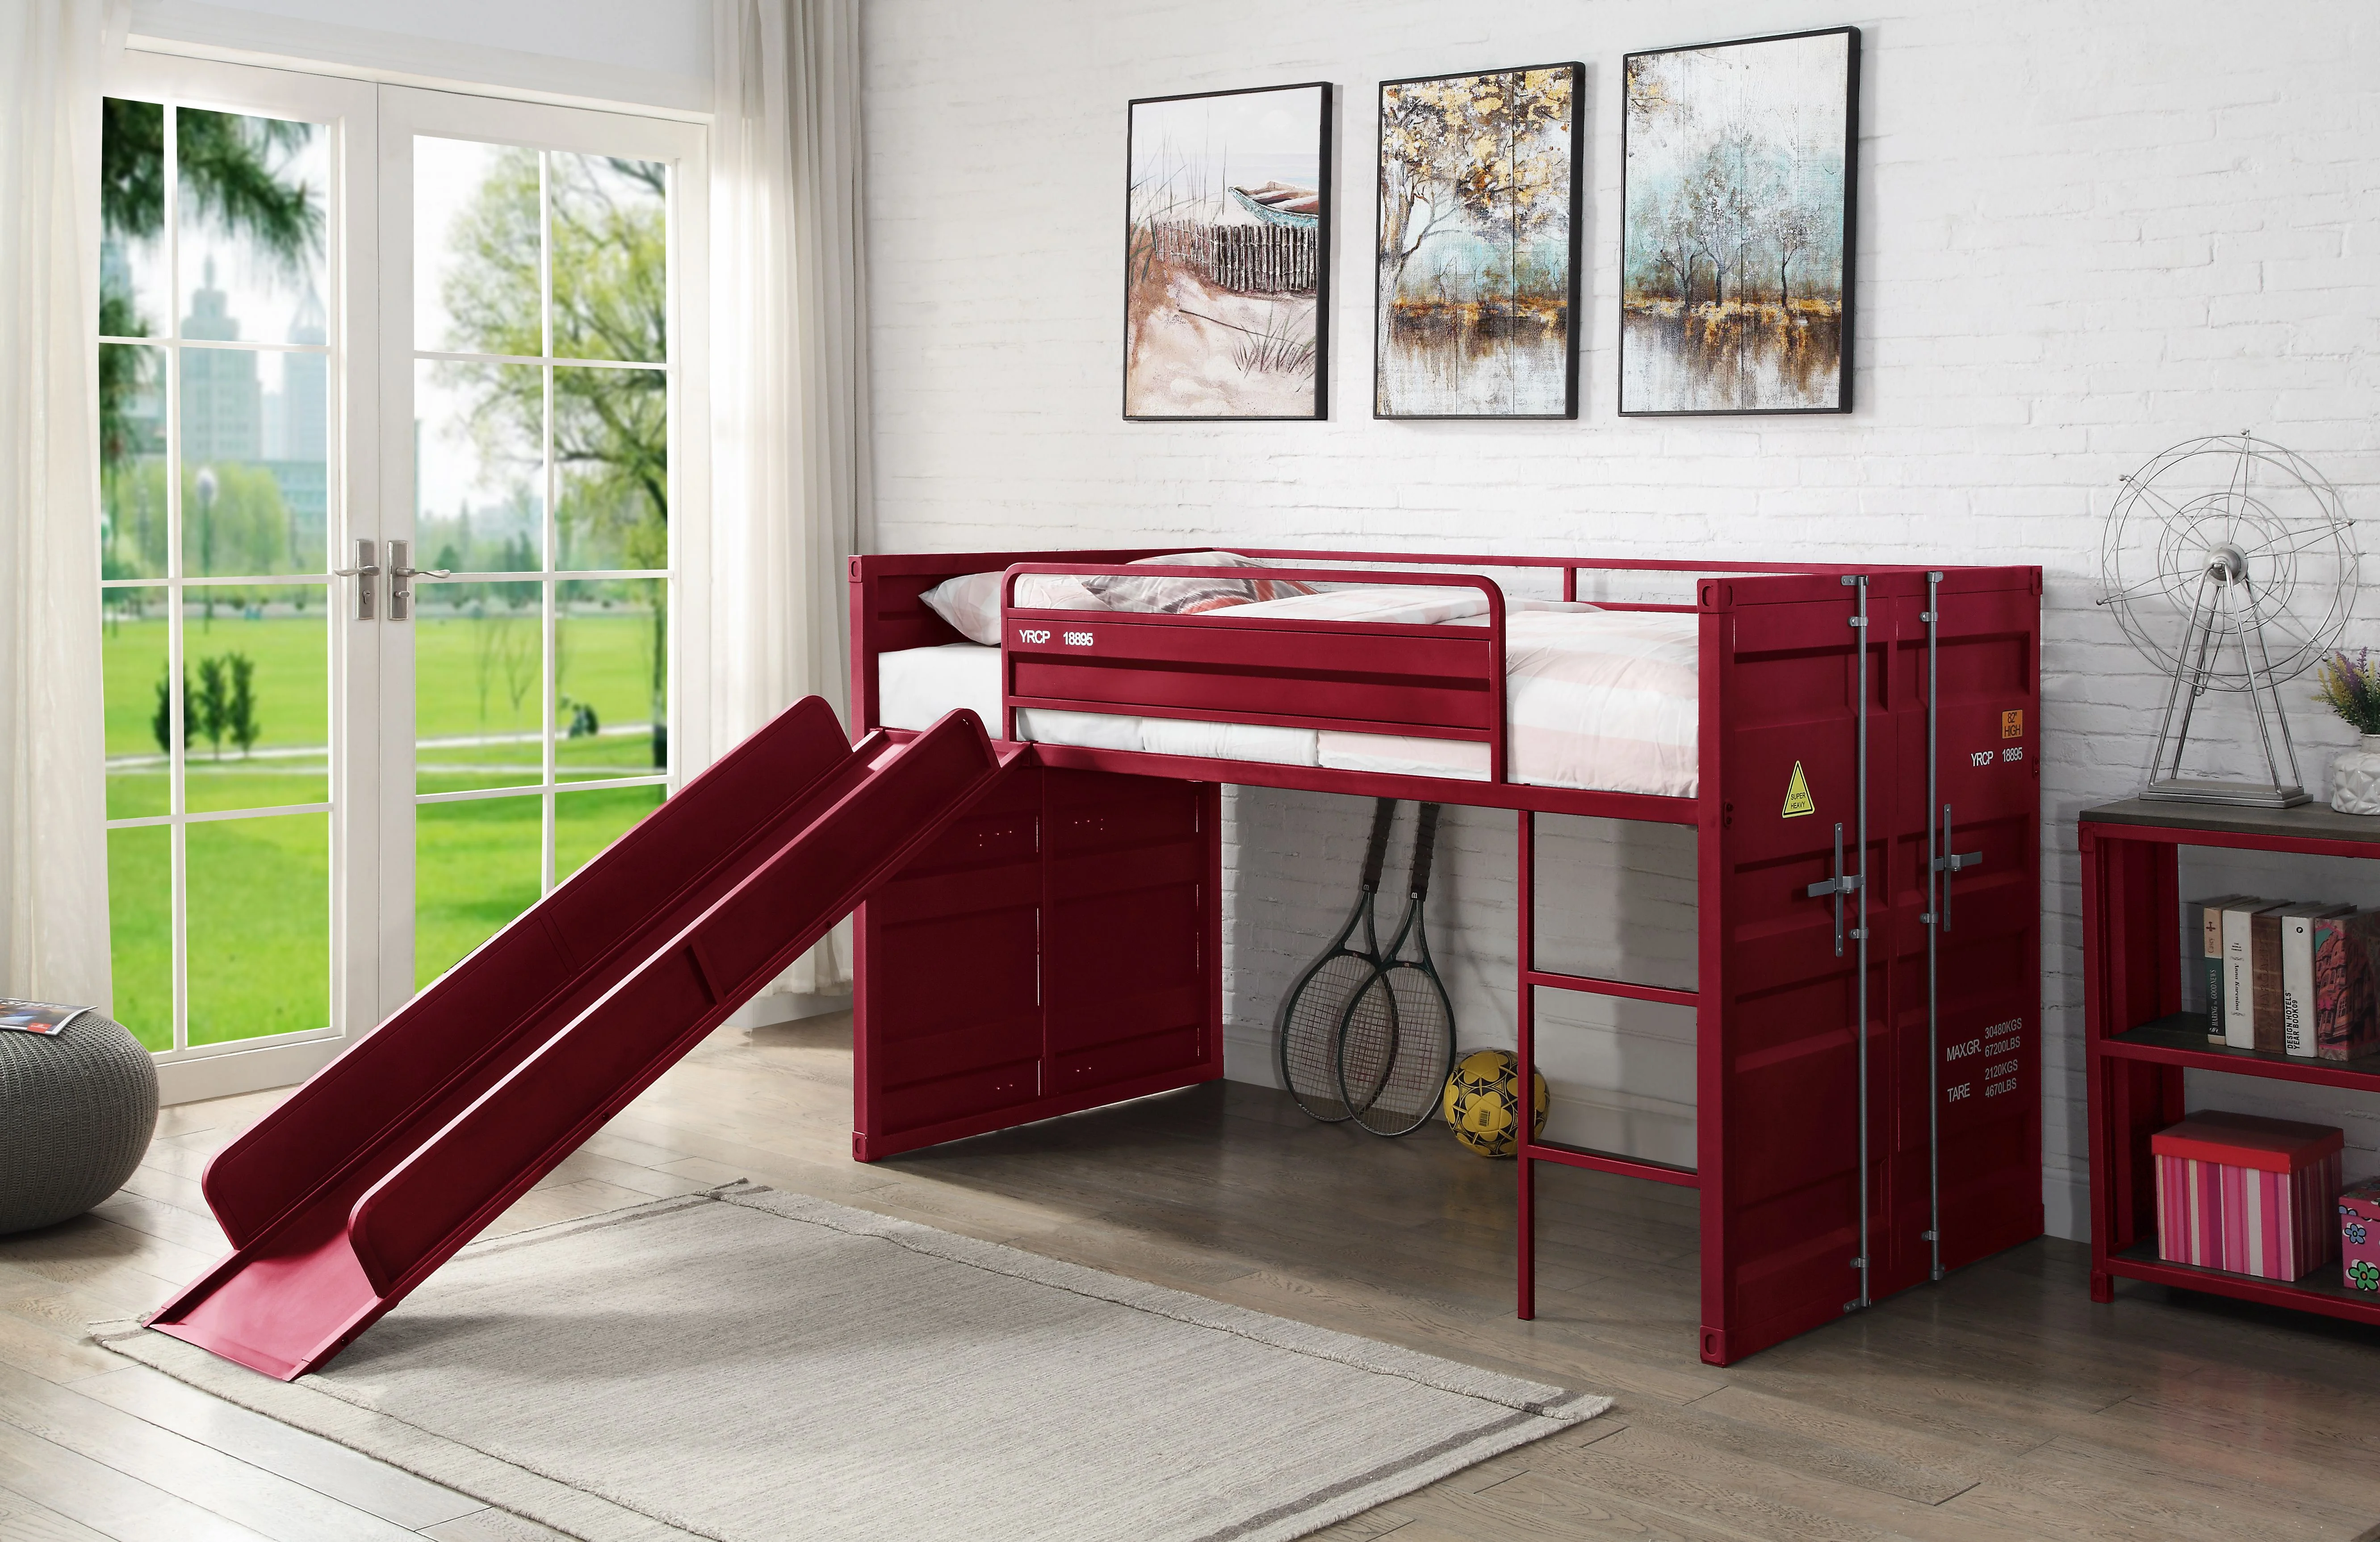 

Cargo Twin Loft Bed w/Slide, Red Finish 38300